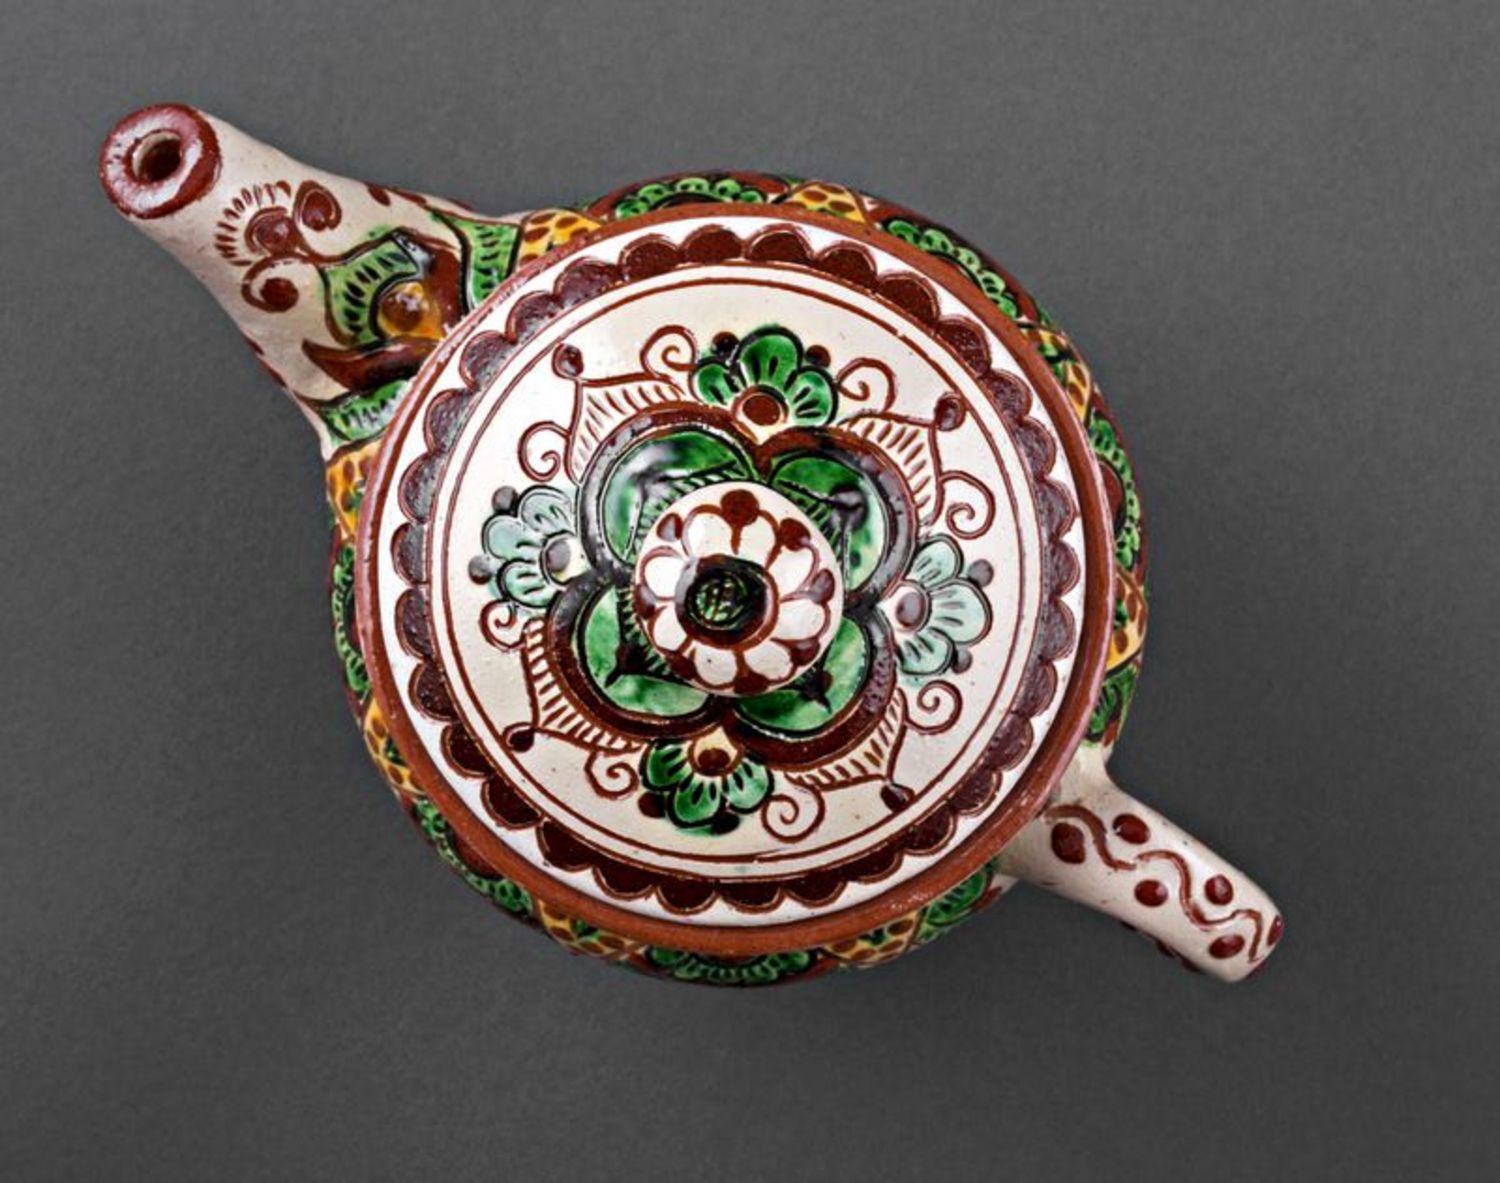 Decorative ceramic teapot photo 3